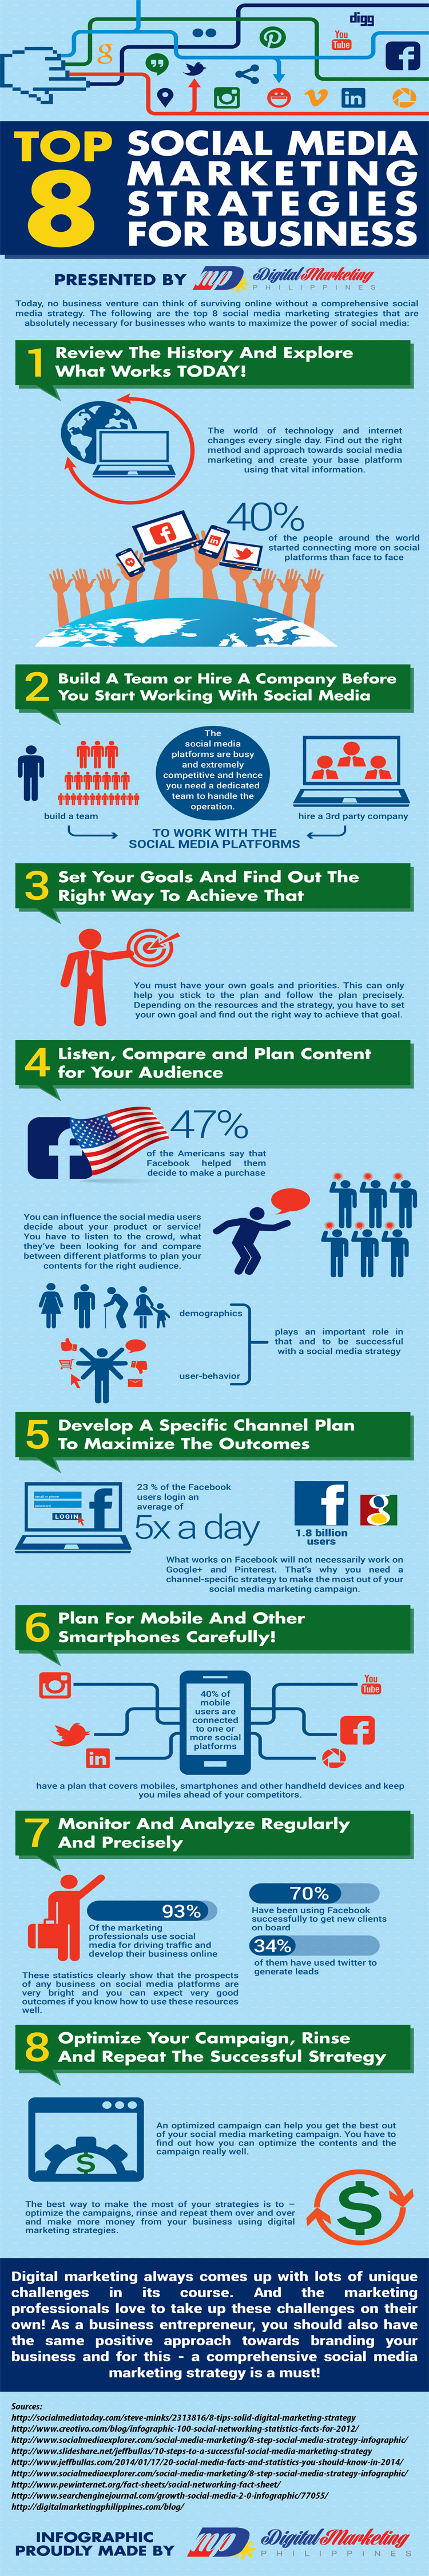 Top 8 Social Media Marketing Strategies for Business